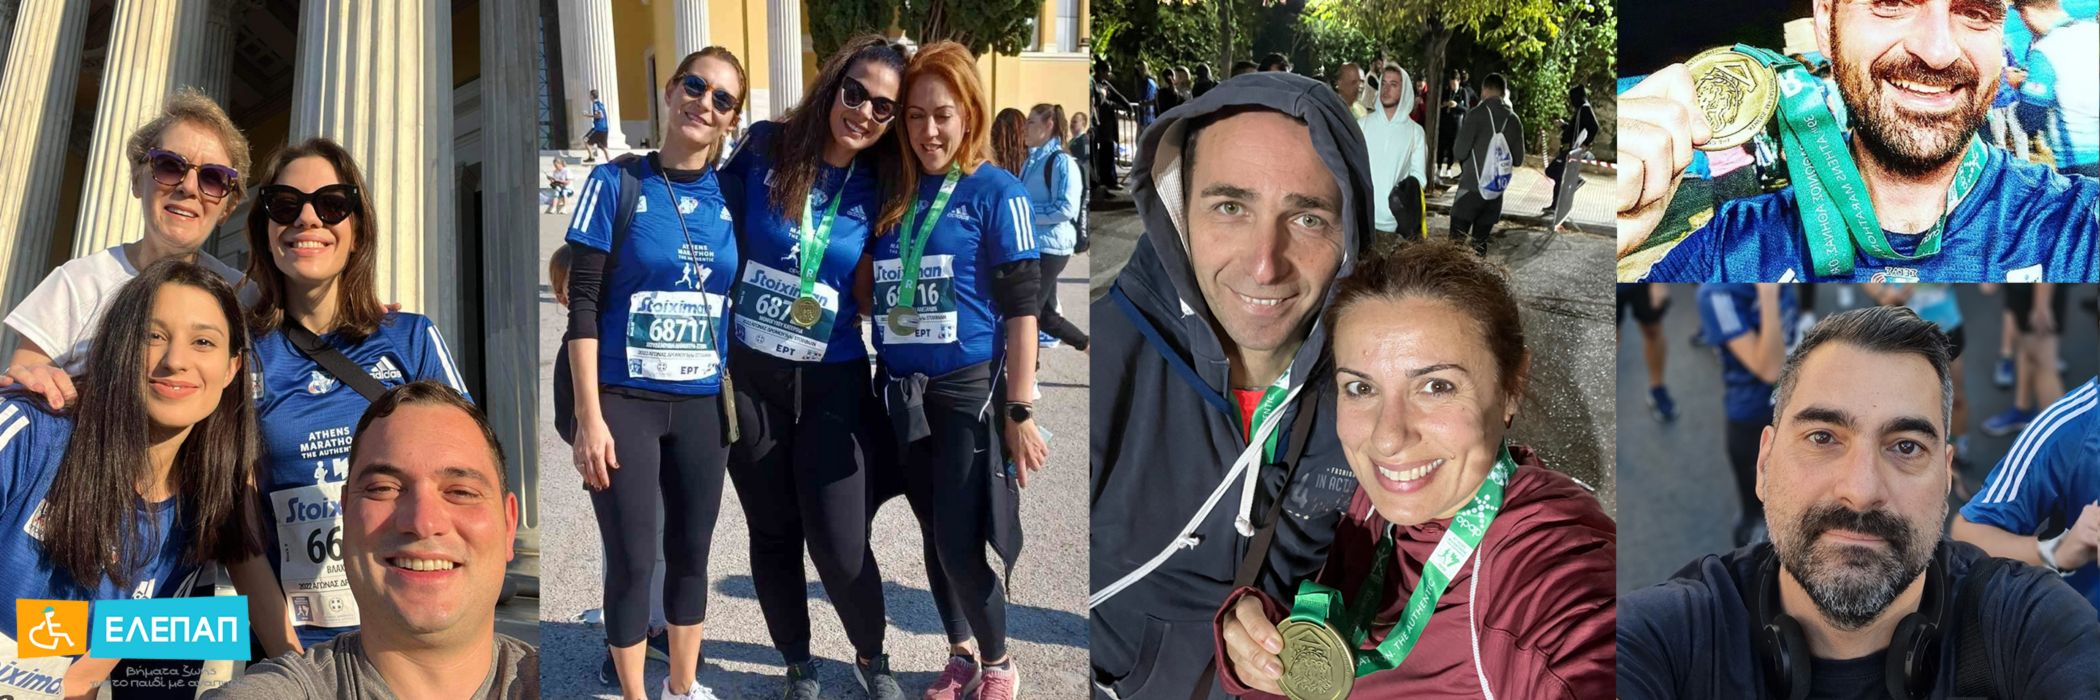 kpmg staff at authentic athens marathon 2022